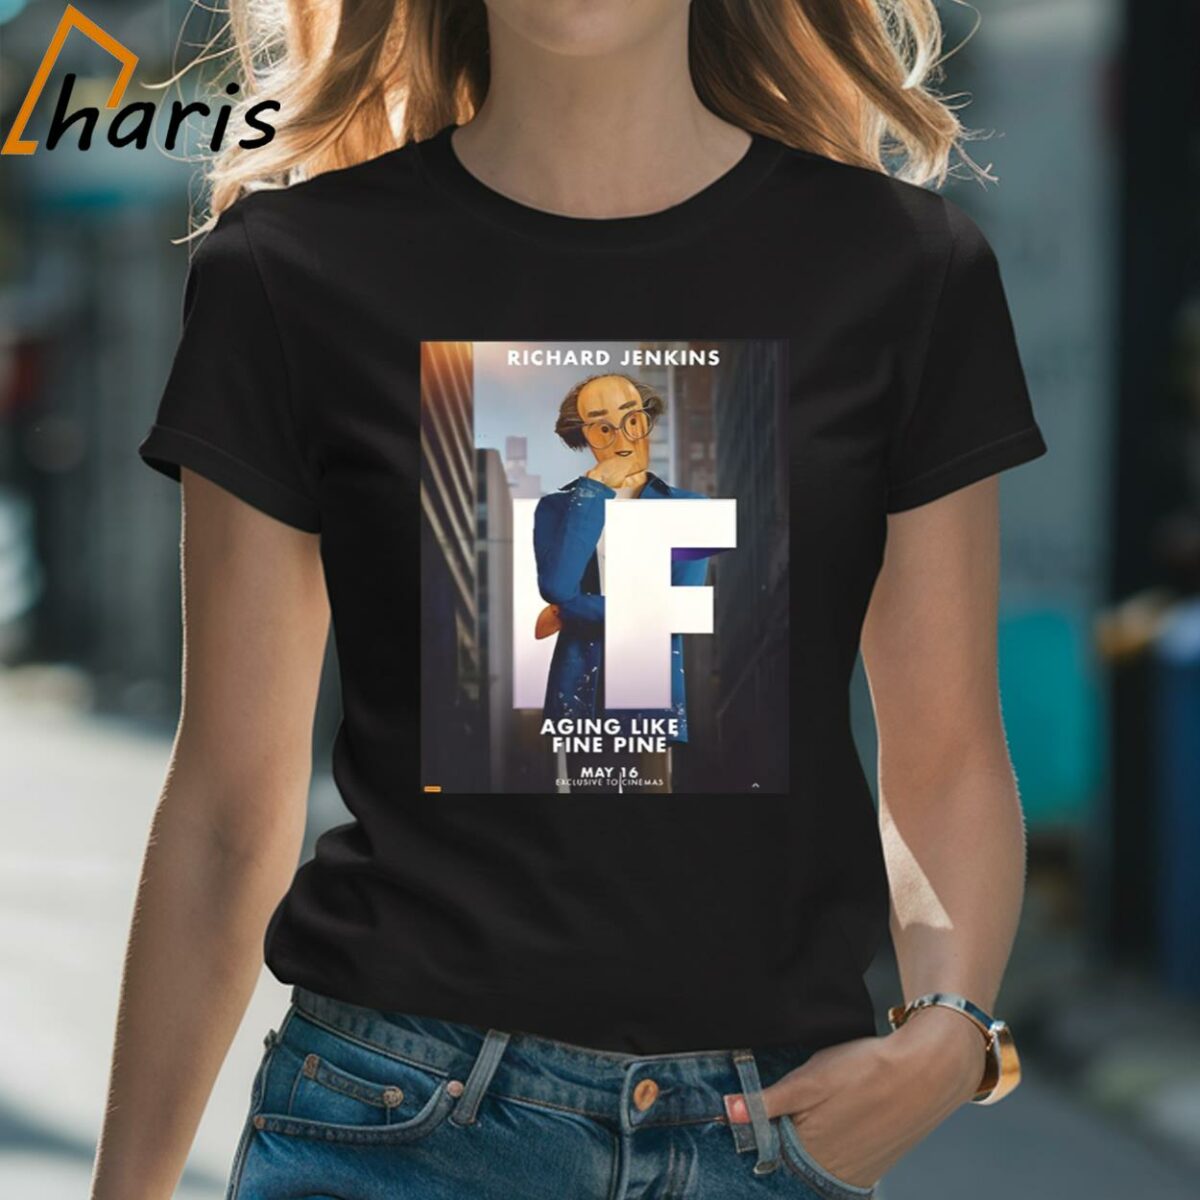 Richard Jenkins IF Character Poster Aging Like Fine Pine IF Movie T Shirt 2 Shirt